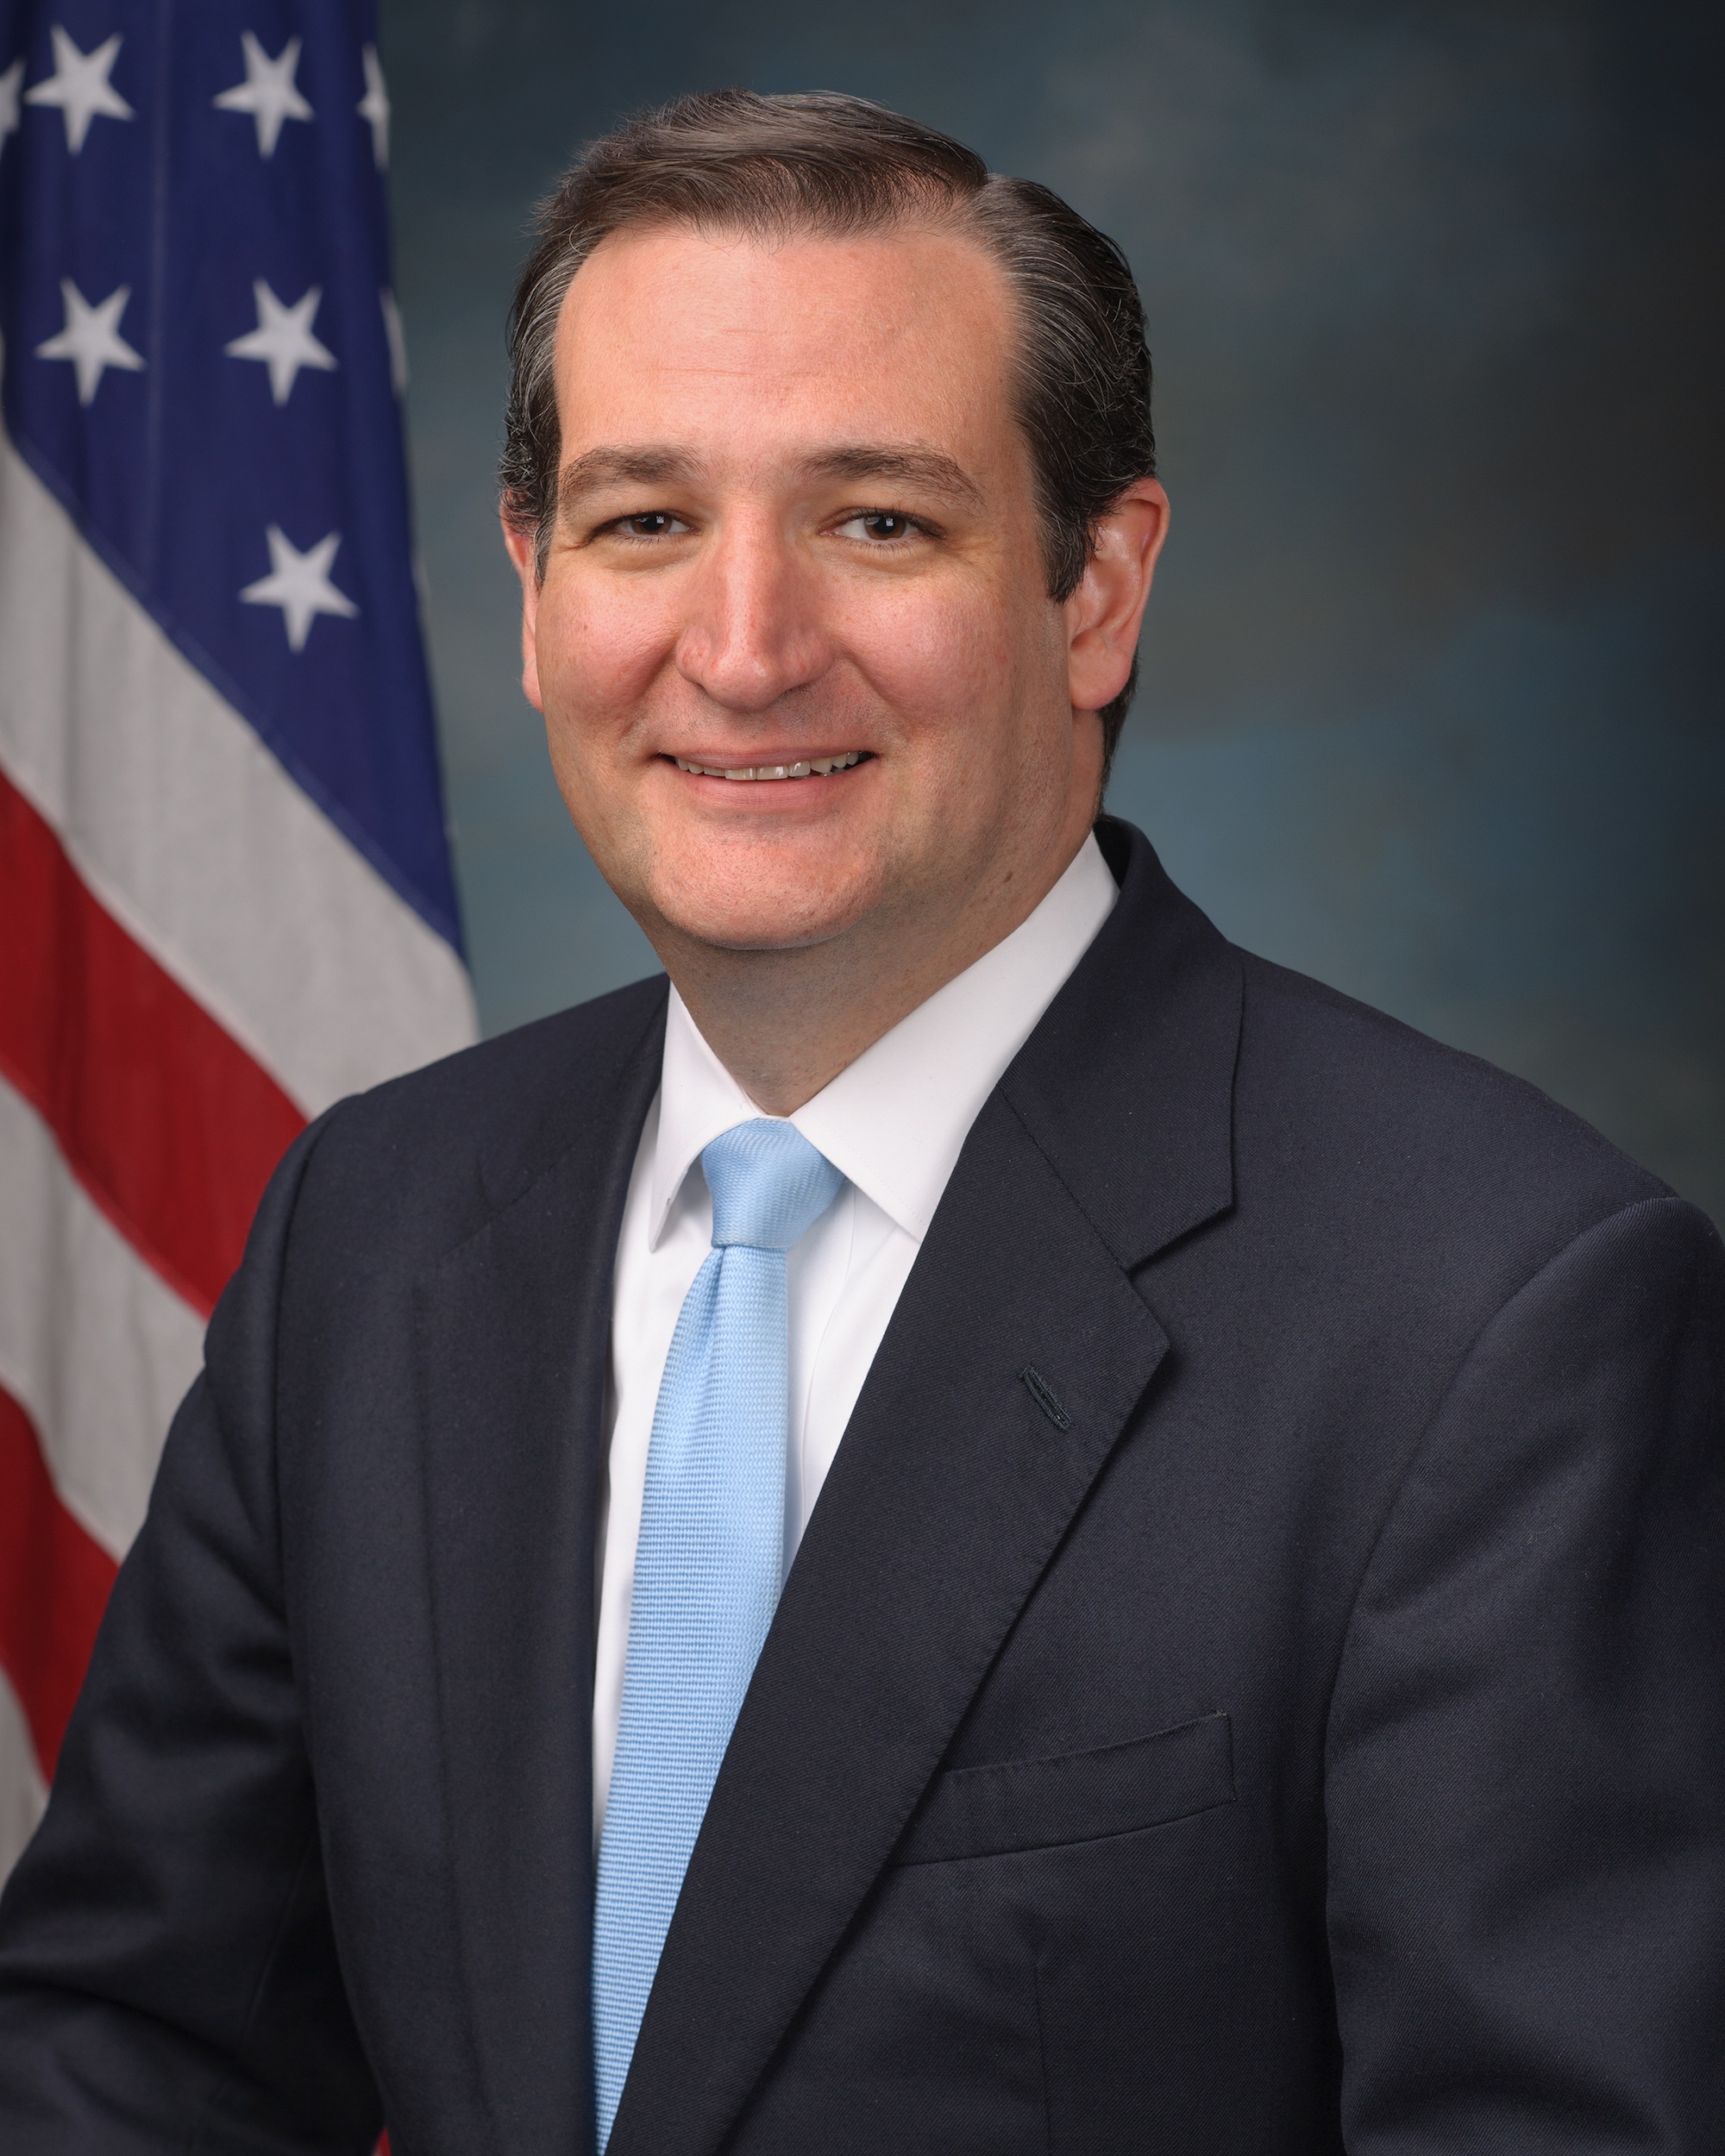 Ted Cruz Profile Picture